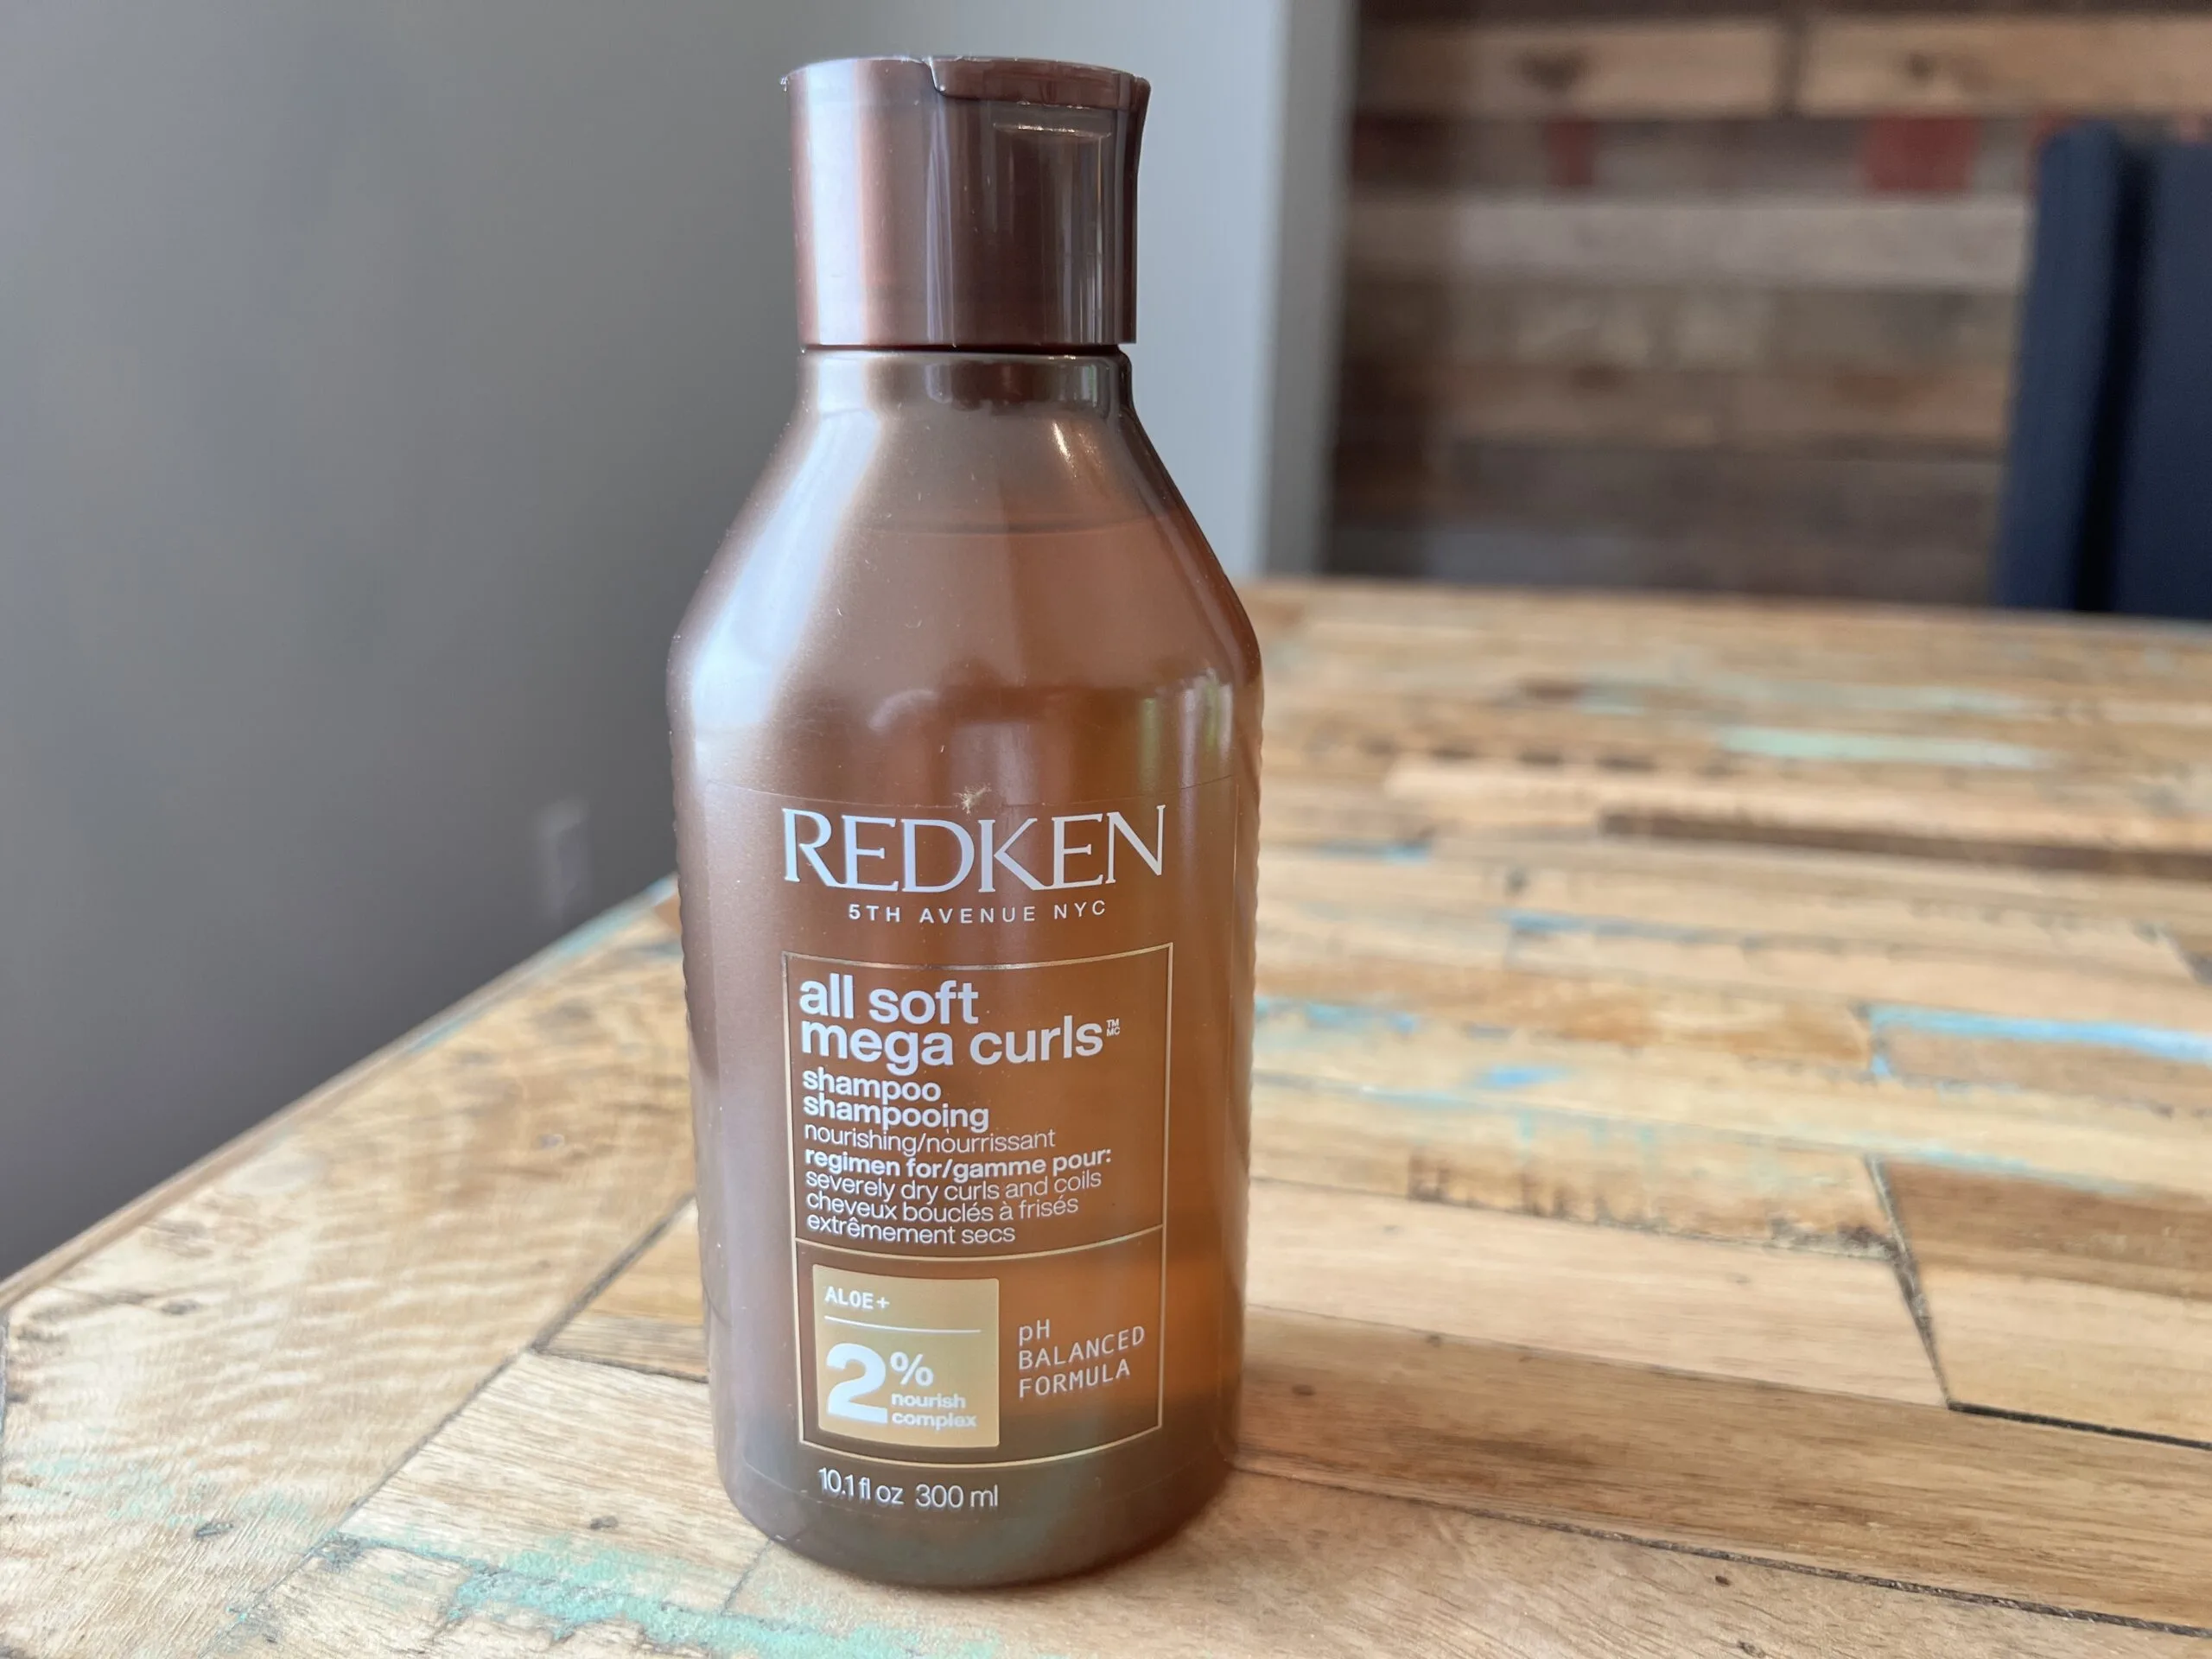 Redken 5th Avenue NYC: All Soft Mega Curls nourishing shampoo with a pH-balanced formula.